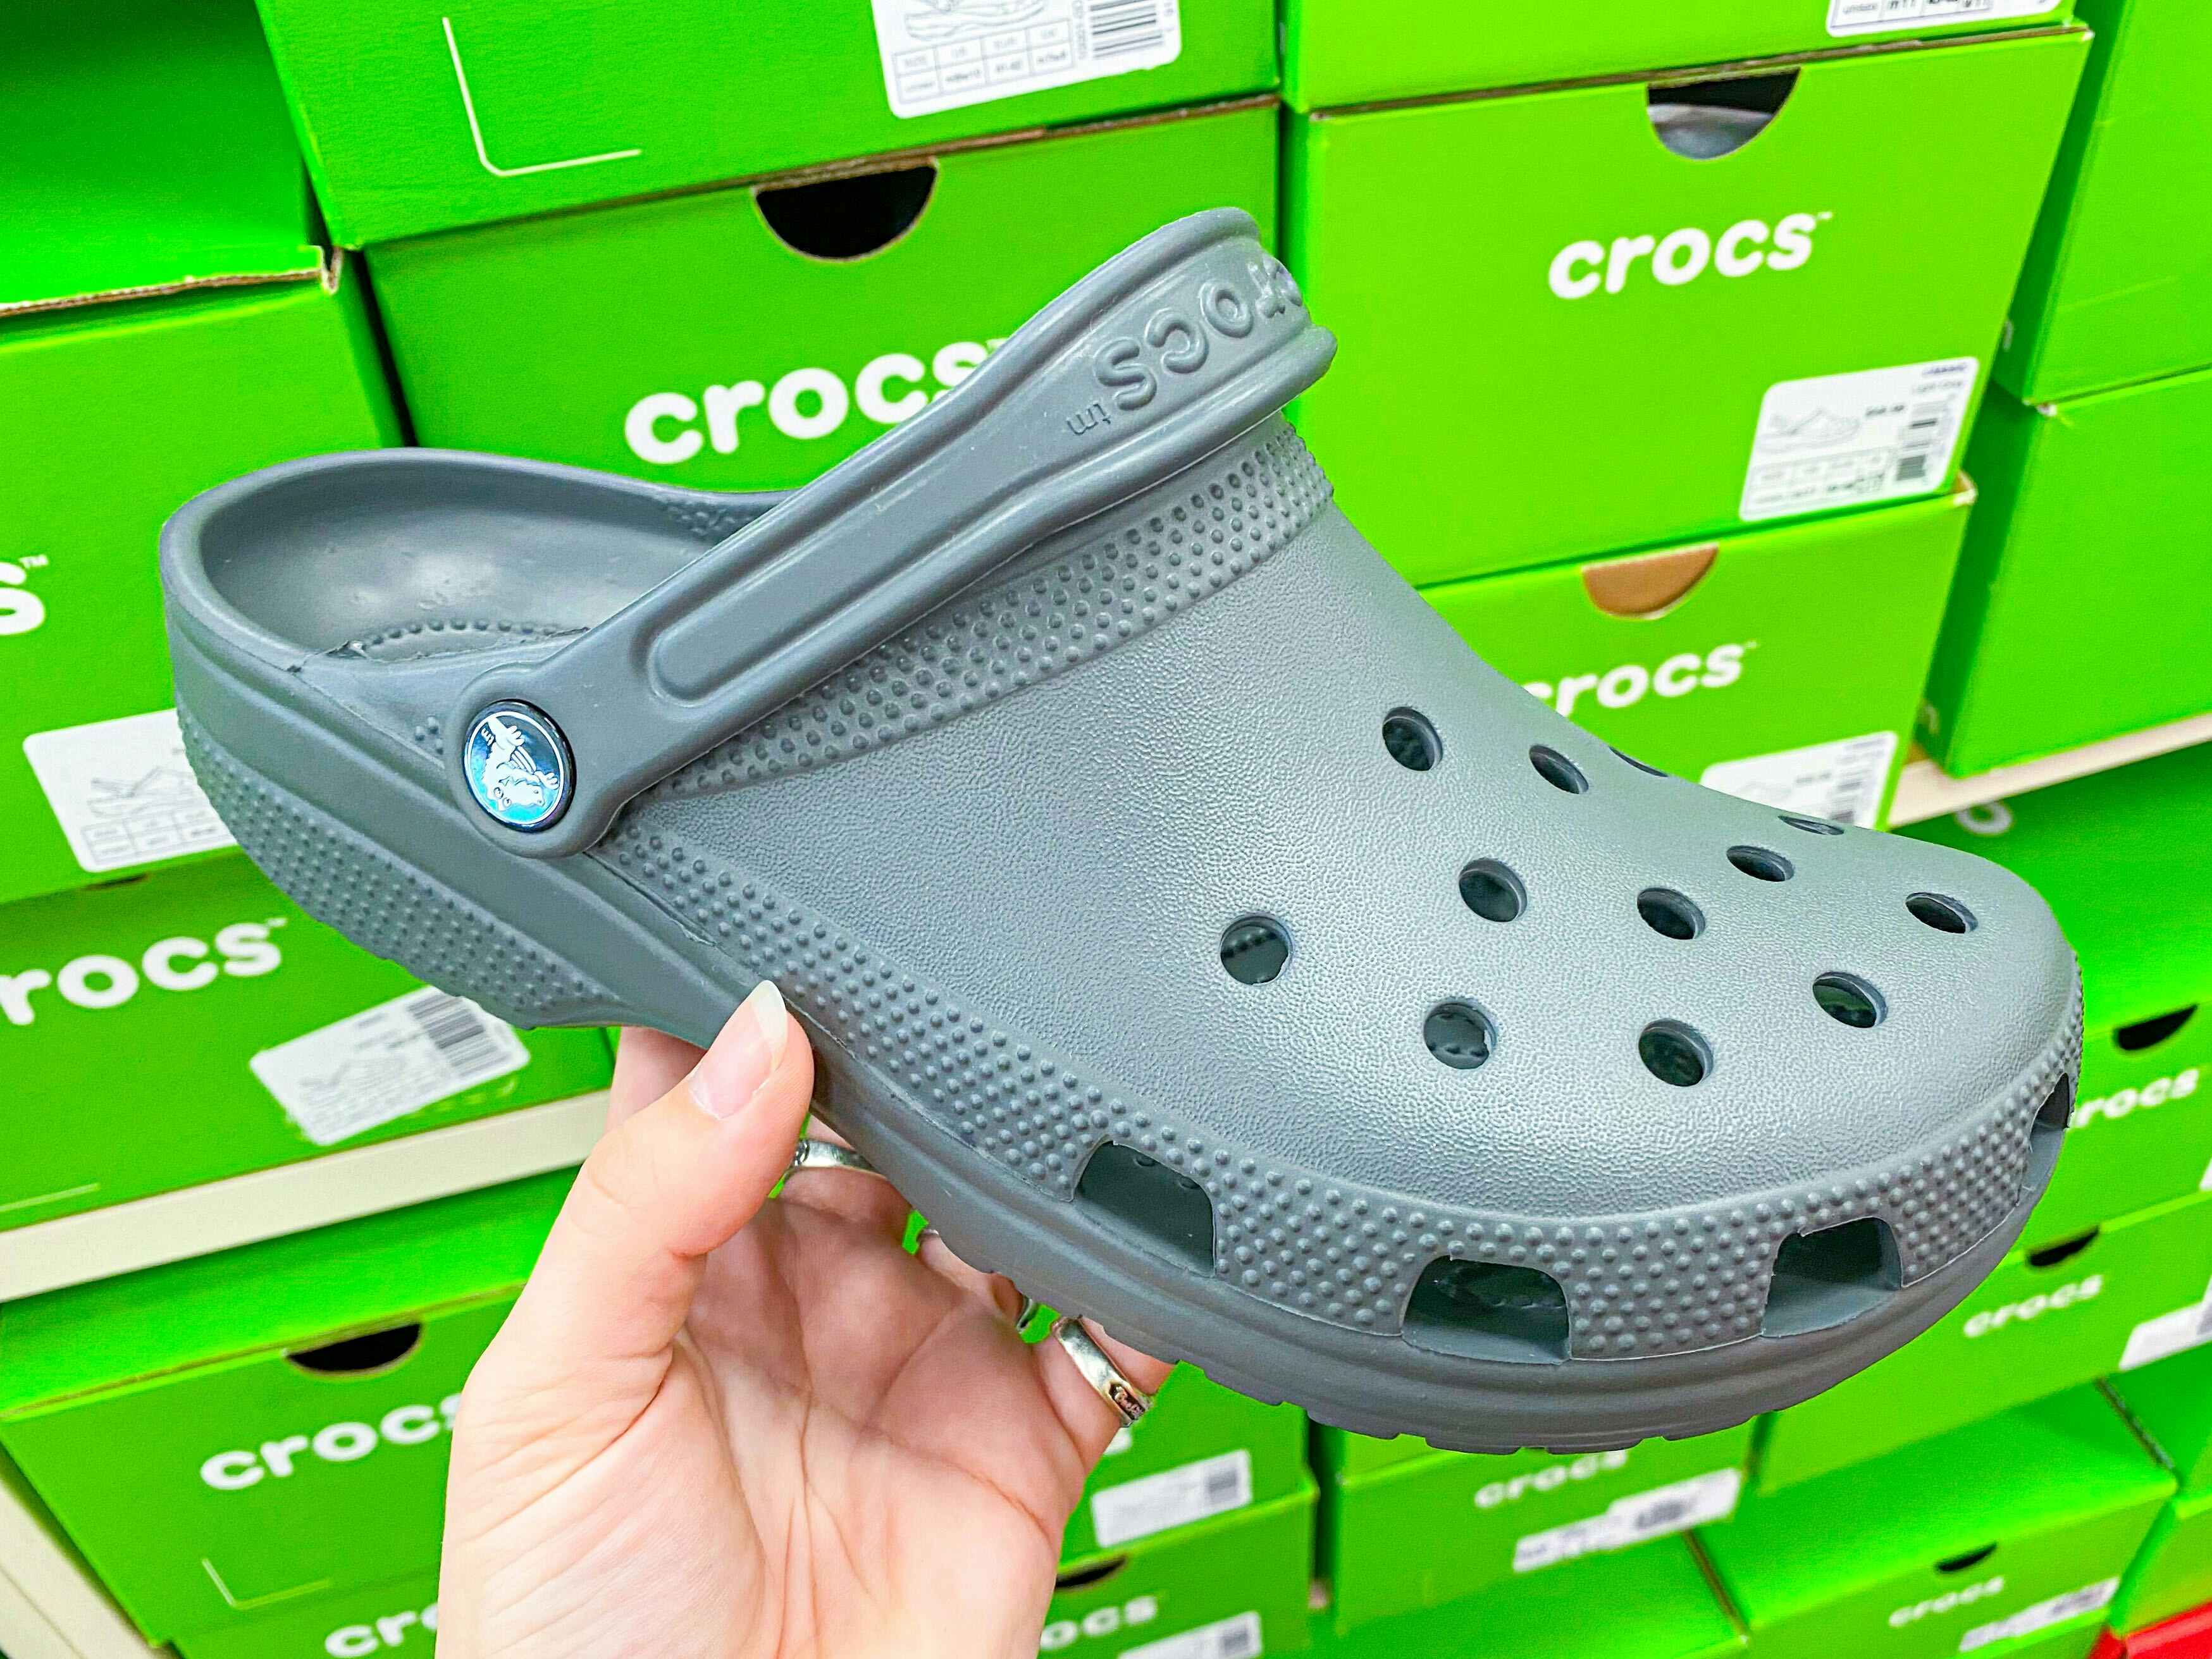 Get $170 Worth of Crocs for $70 on eBay, Plus More Crocs Deals